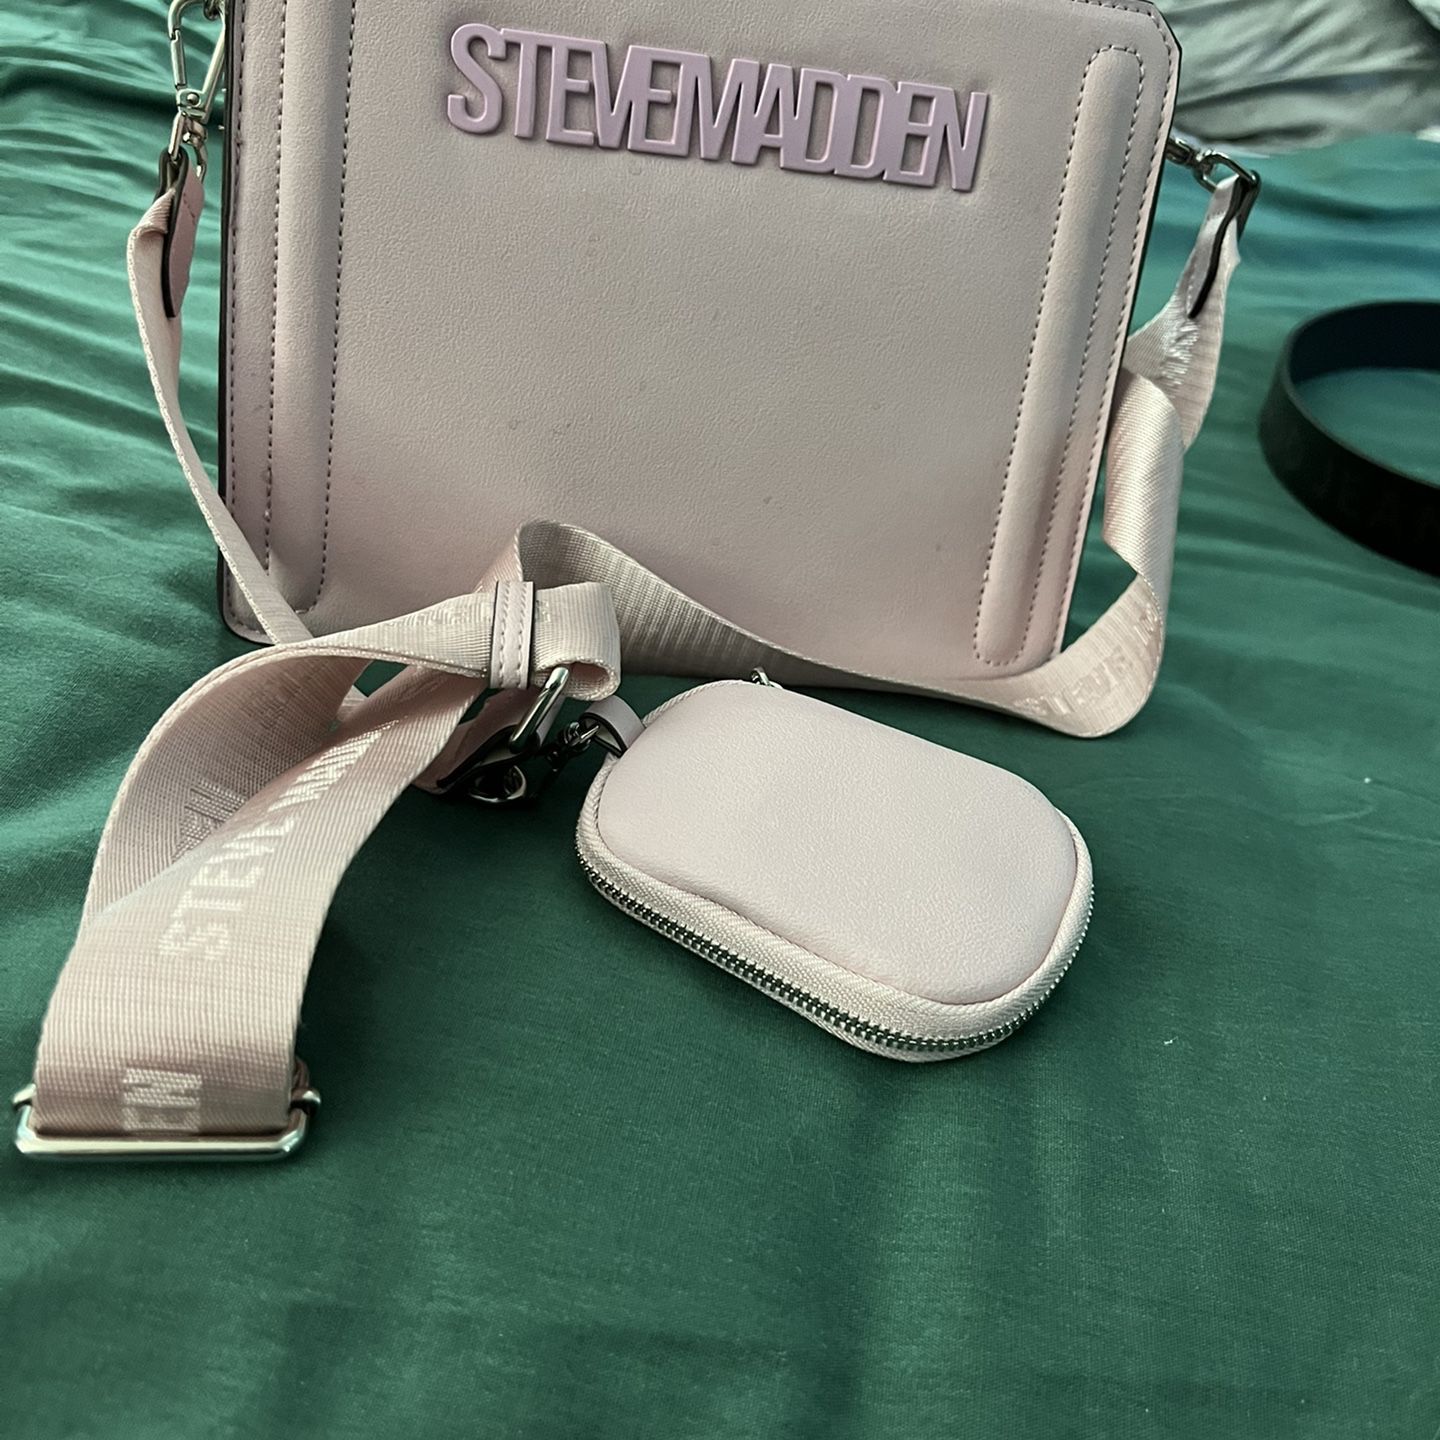 Steve Madden Bright PINK crossbody bag - NWT for Sale in Alpharetta, GA -  OfferUp